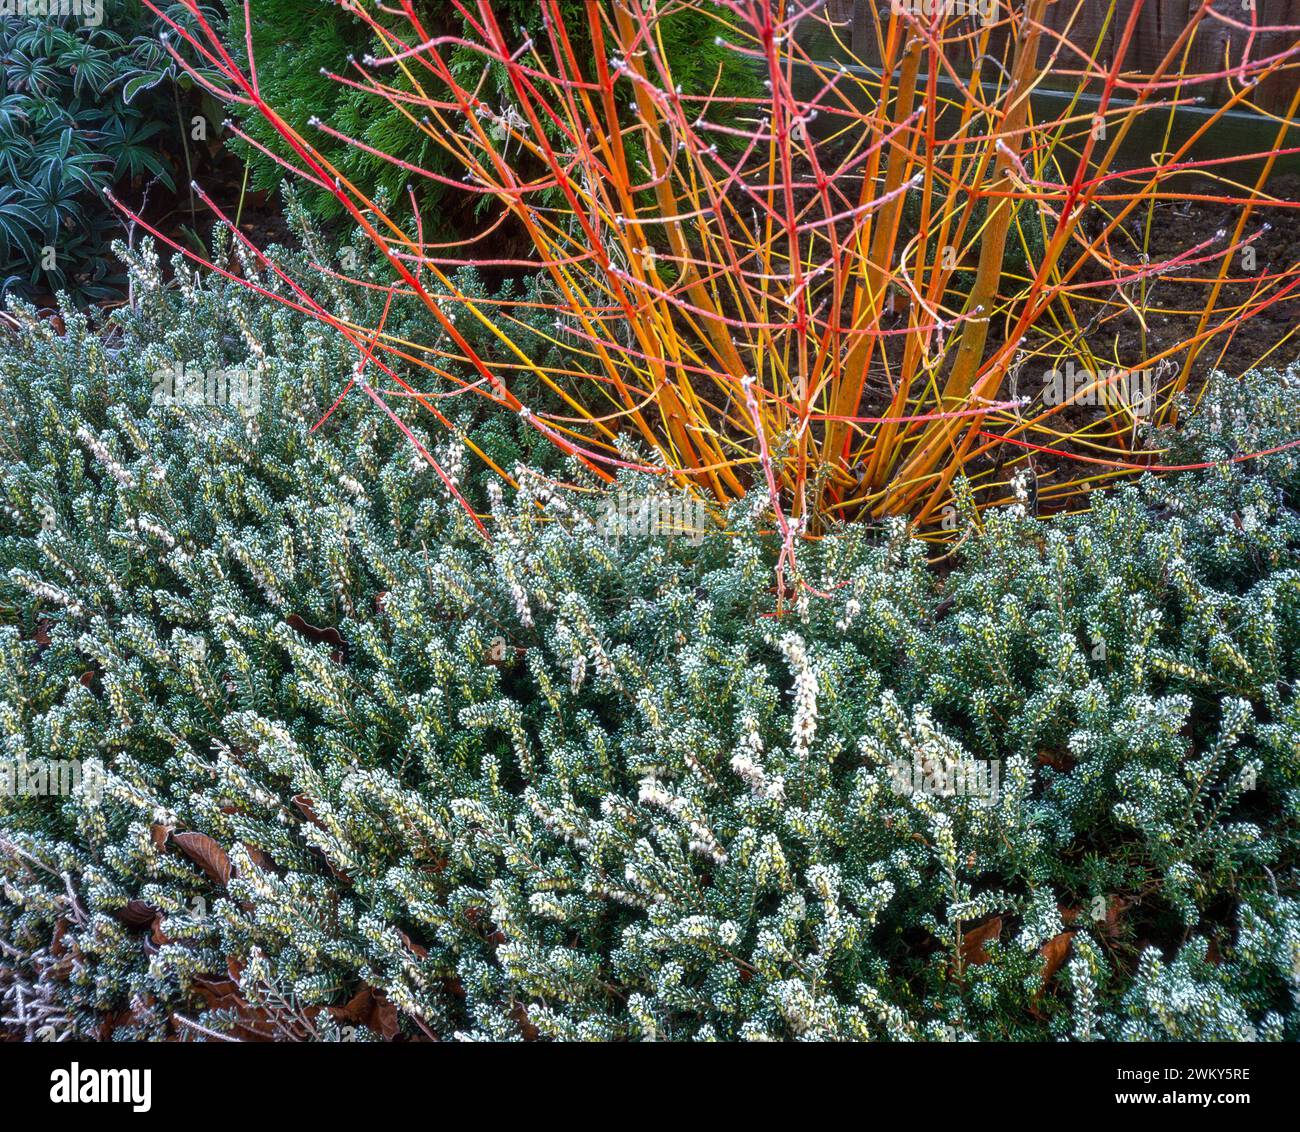 Bright stems of Cornus sanguinea 'Midwinter Fire’ dogwood with white flowers of Erica darleyensis ‘Silberschmelze’ heather in Winter, England, UK Stock Photo